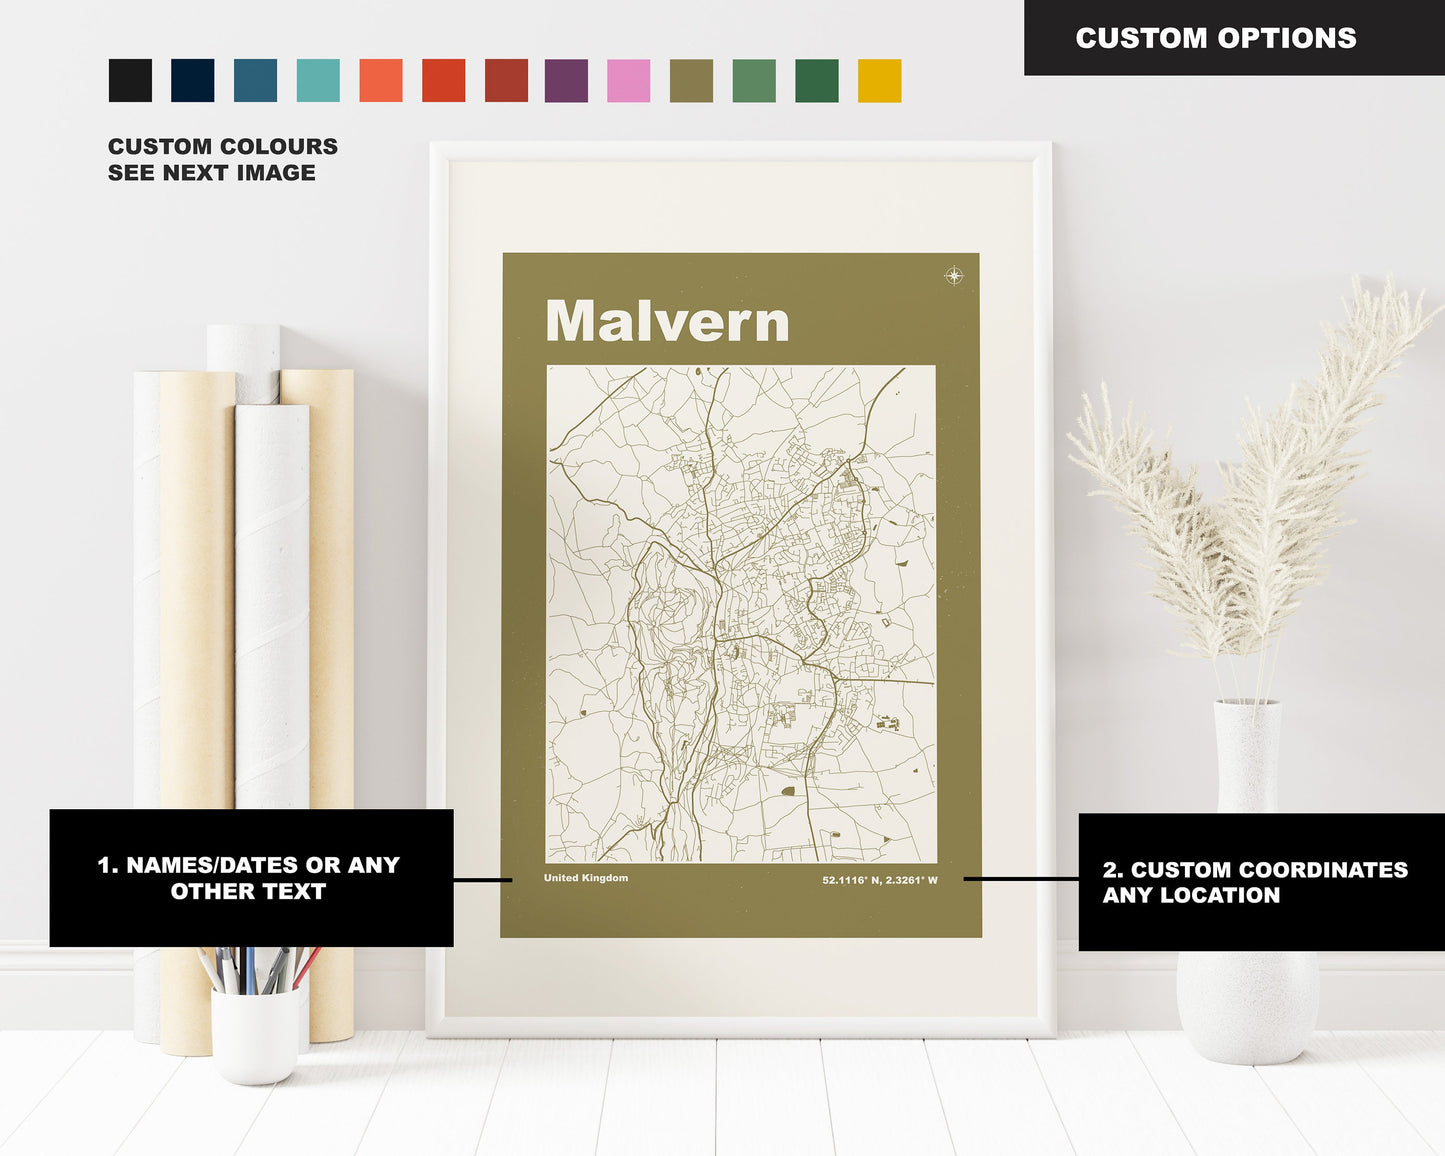 Malvern Print - Map Print - Mid Century Modern  - Retro - Vintage - Contemporary - Malvern Print - Map - Map Poster - Gift - Worcestershire